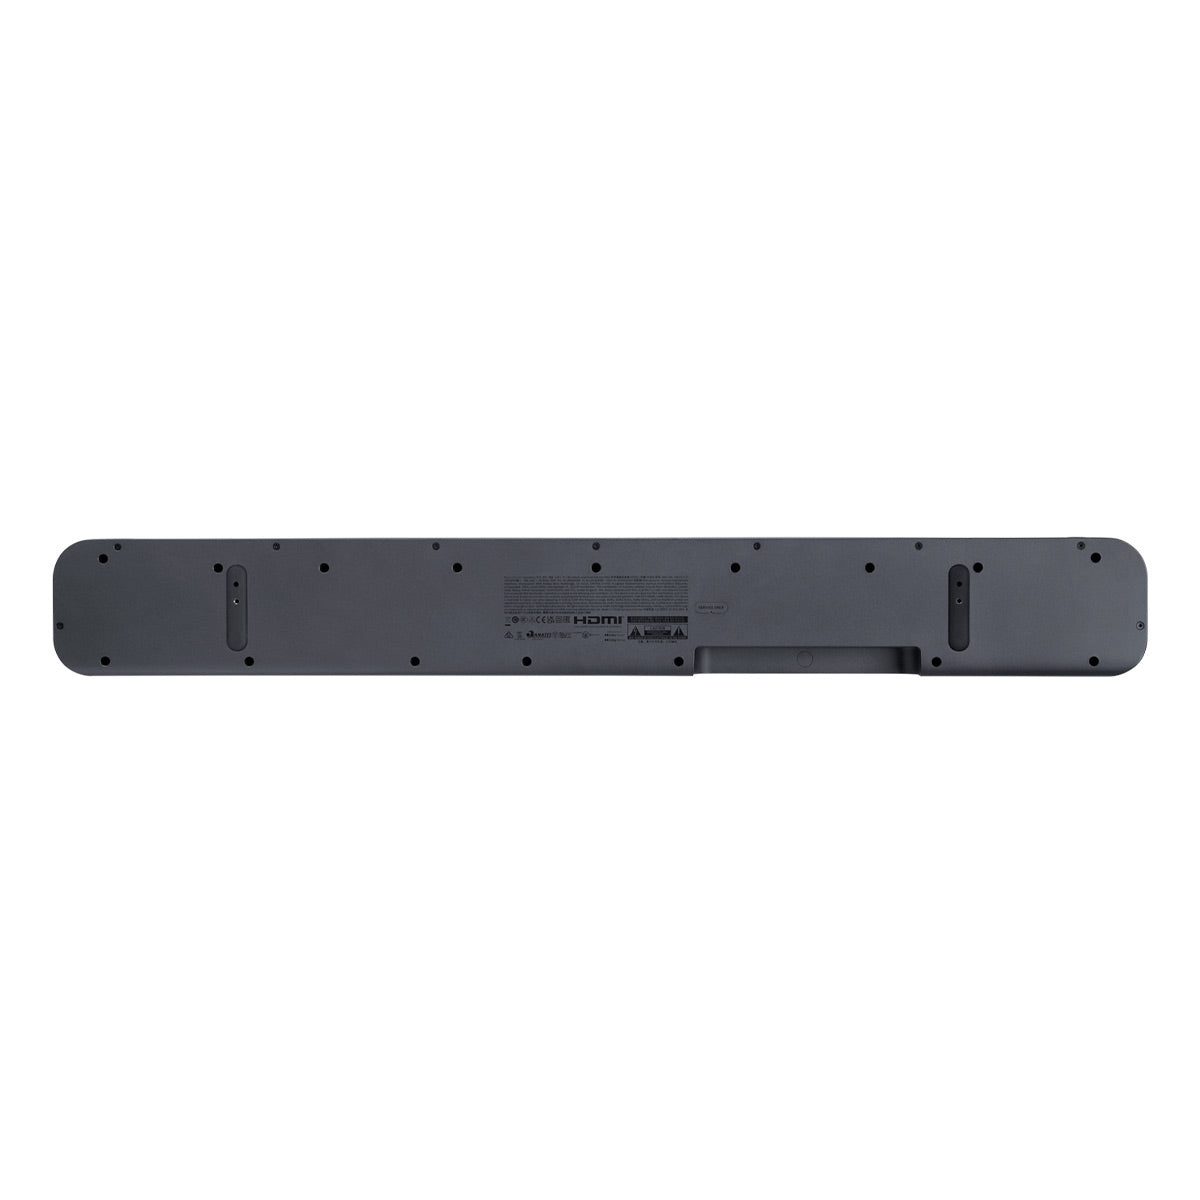 JBL Bar 300 Compact 5.0 Channel Soundbar with Multibeam Sound Technology